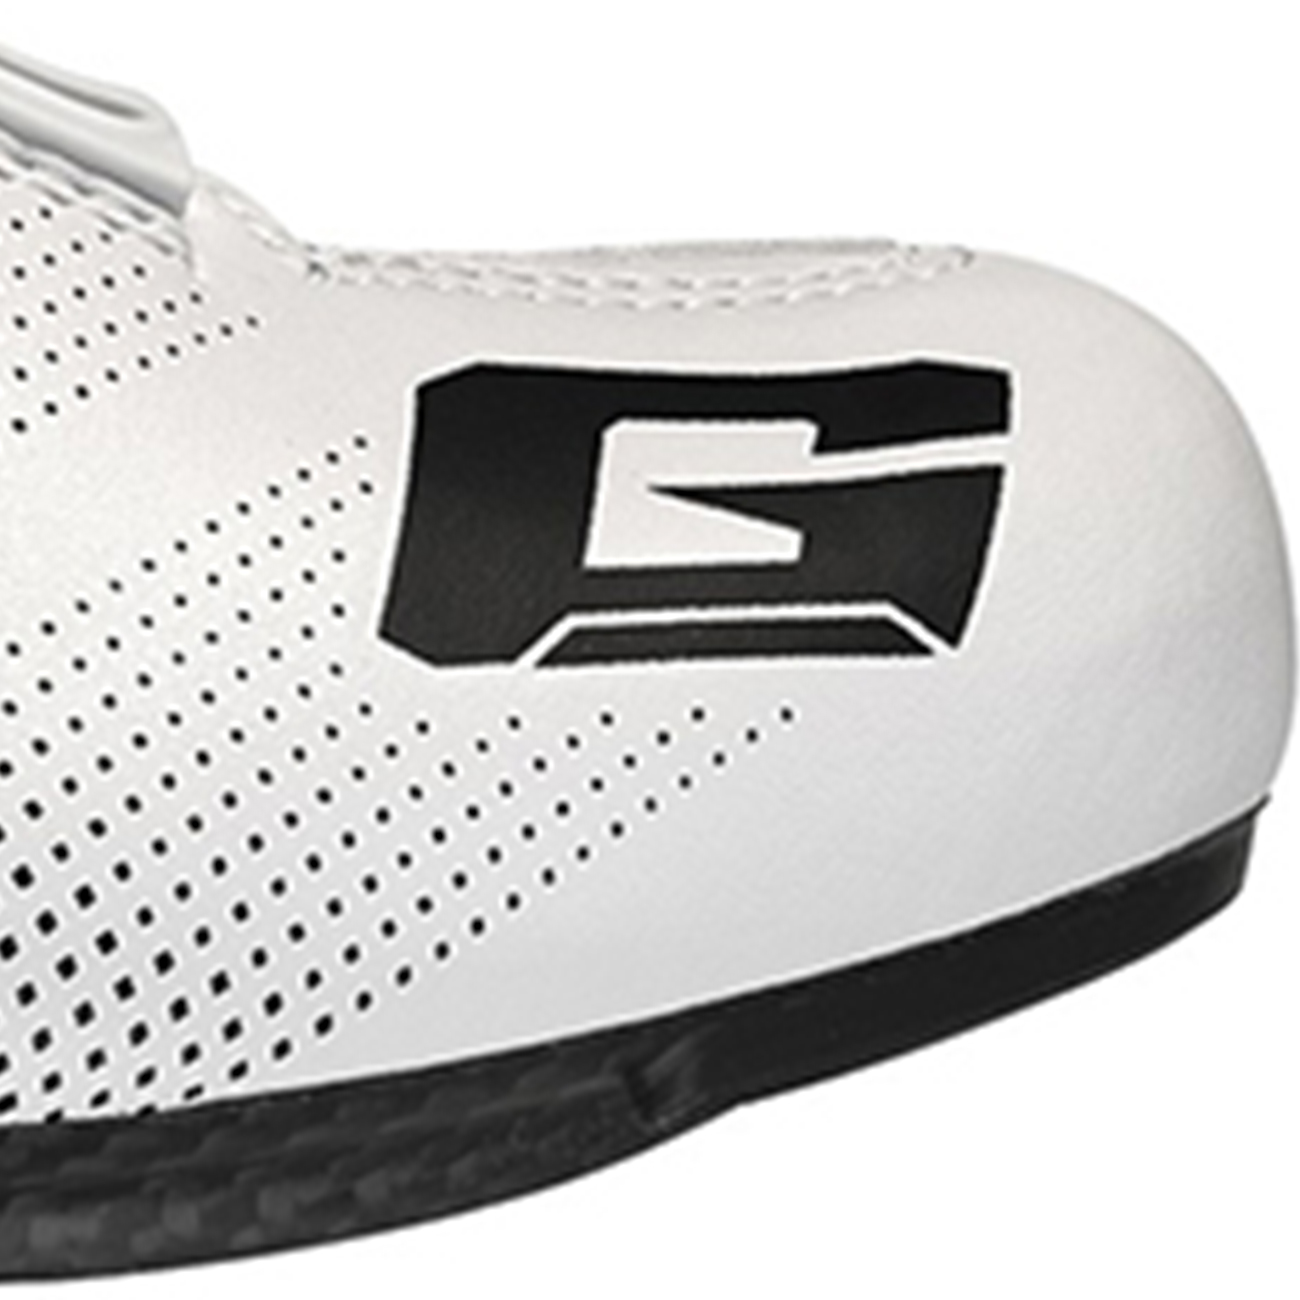 GAERNE Kerékpáros Cipő - TORNADO - Fehér/fekete